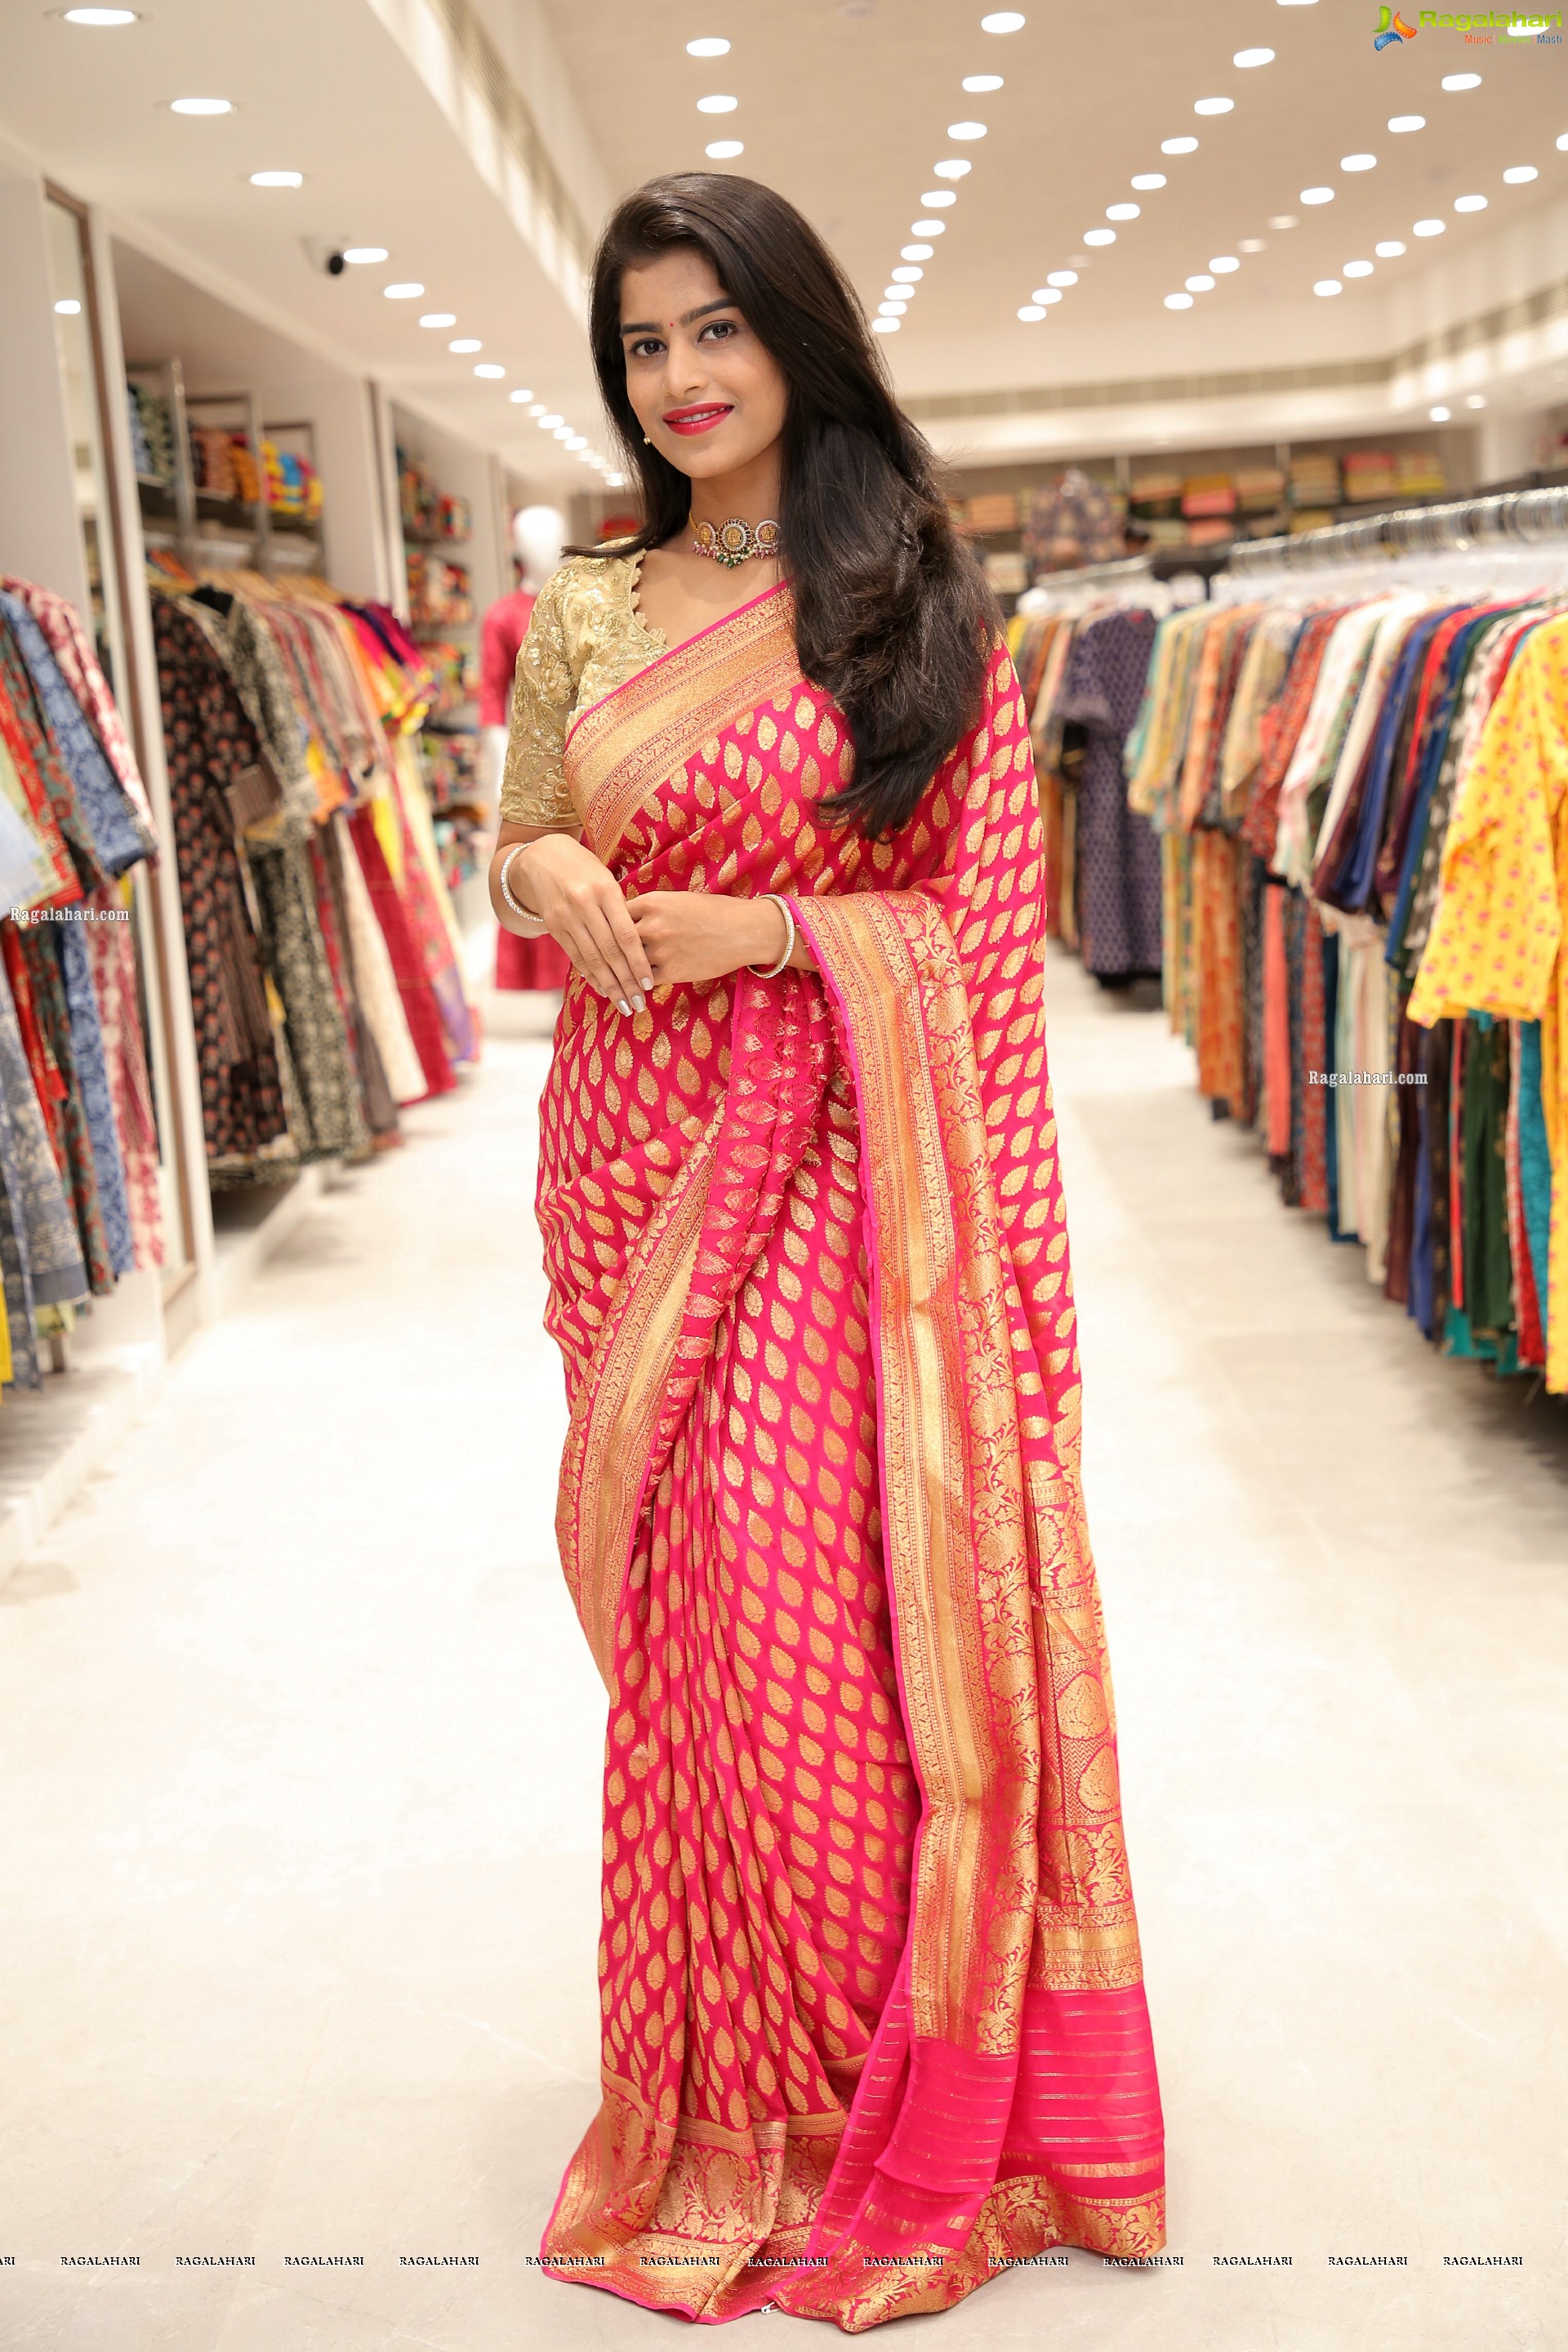 Srilekha in beautiful Saree, HD photo Gallery